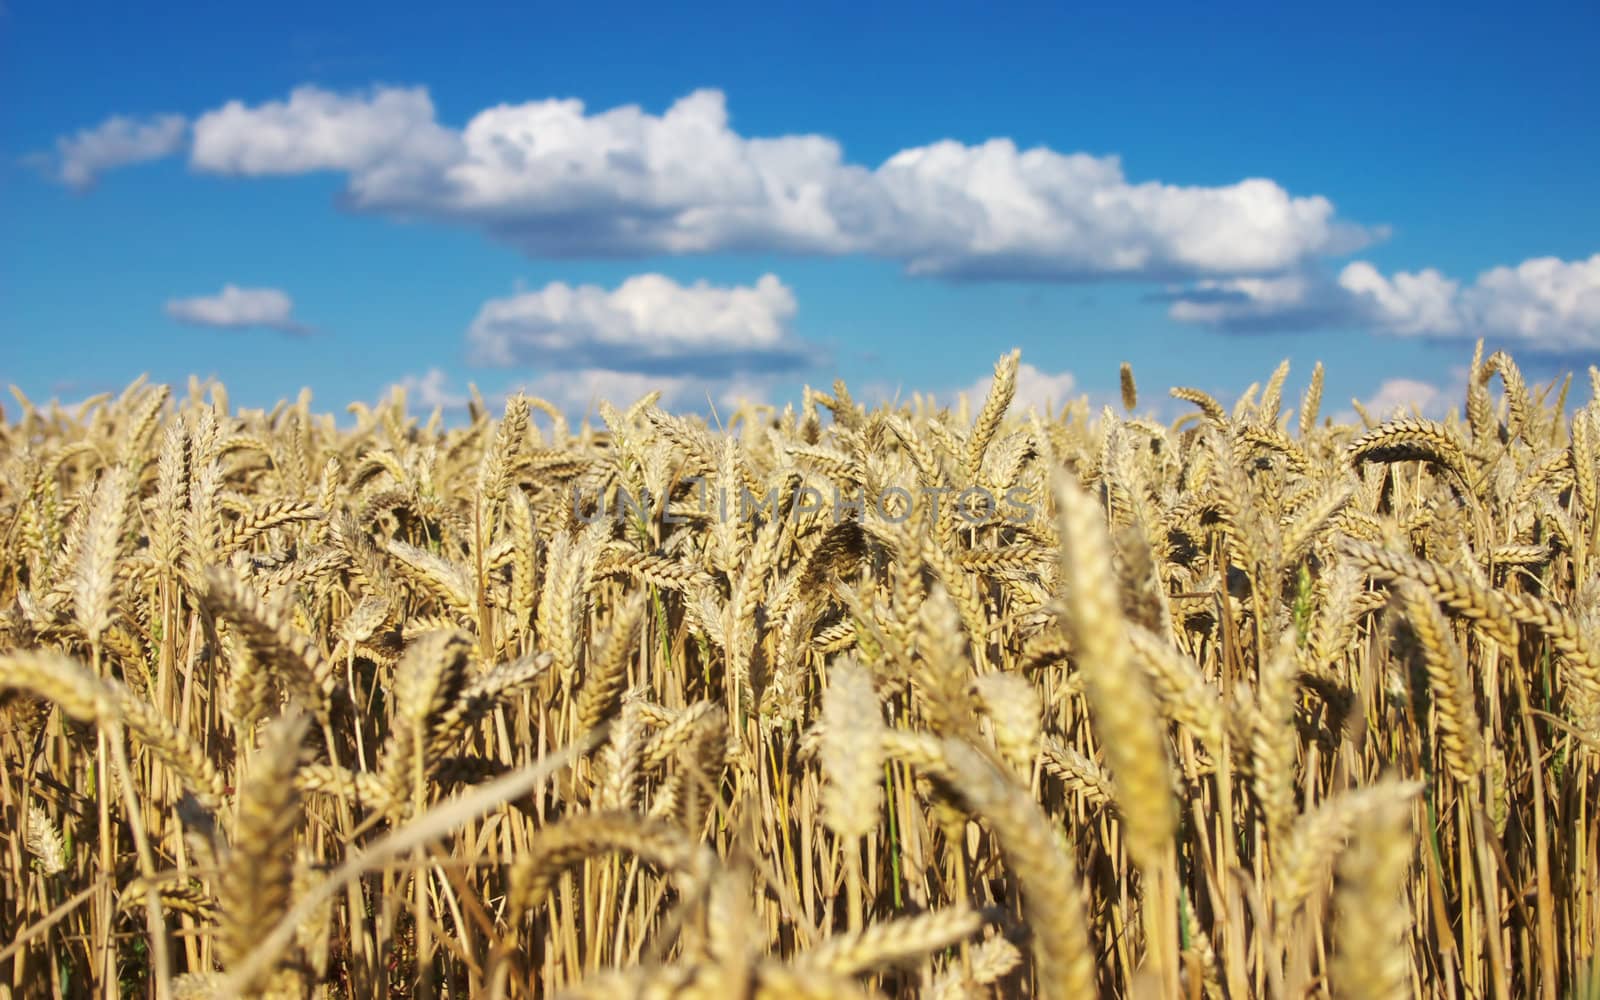 Wheat Field and blue sky by hospitalera